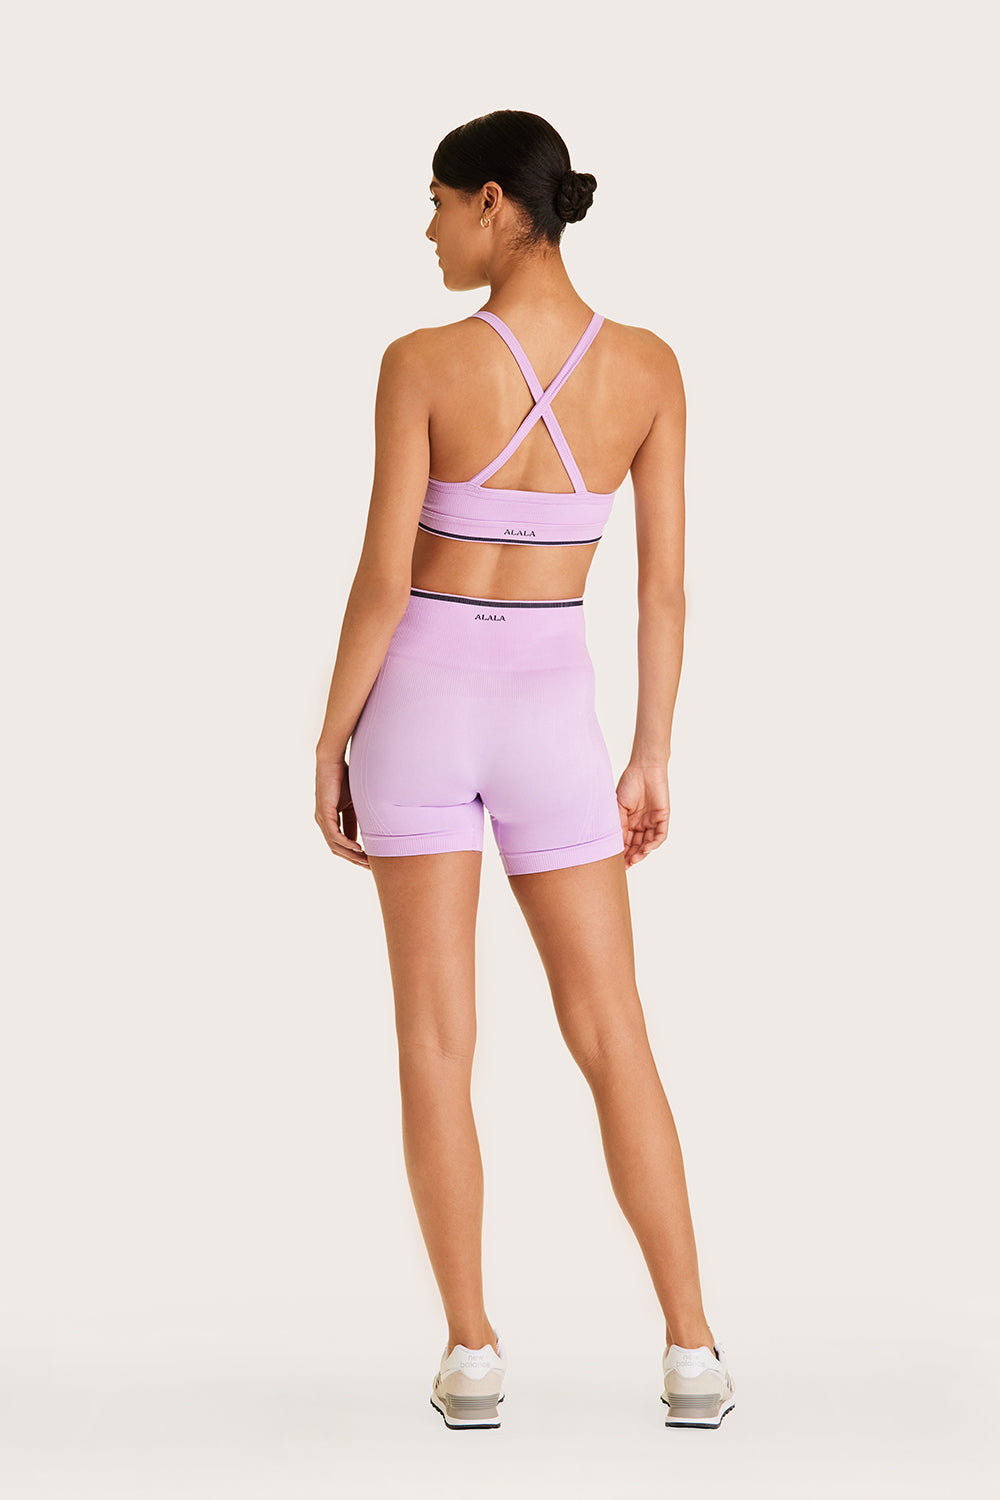 Lululemon Purple Forme Women's Pants Size 10 - $36 - From Madi